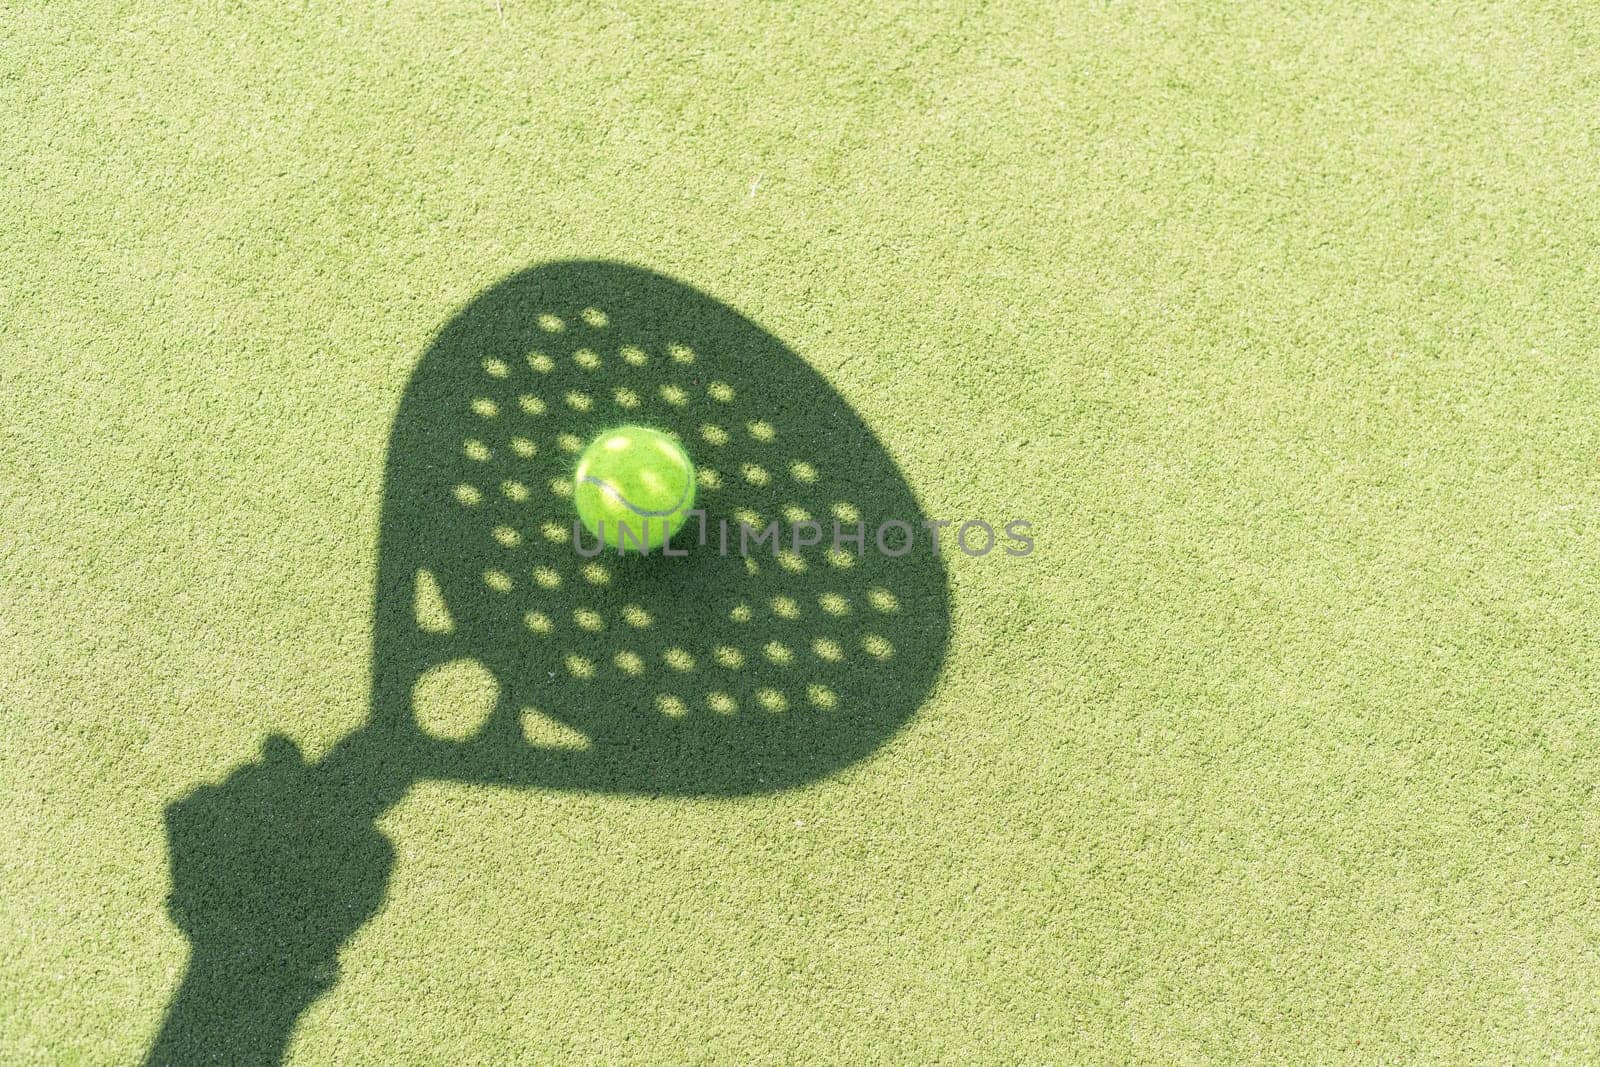 Paddle tennis racket shadow on balls. High quality photo